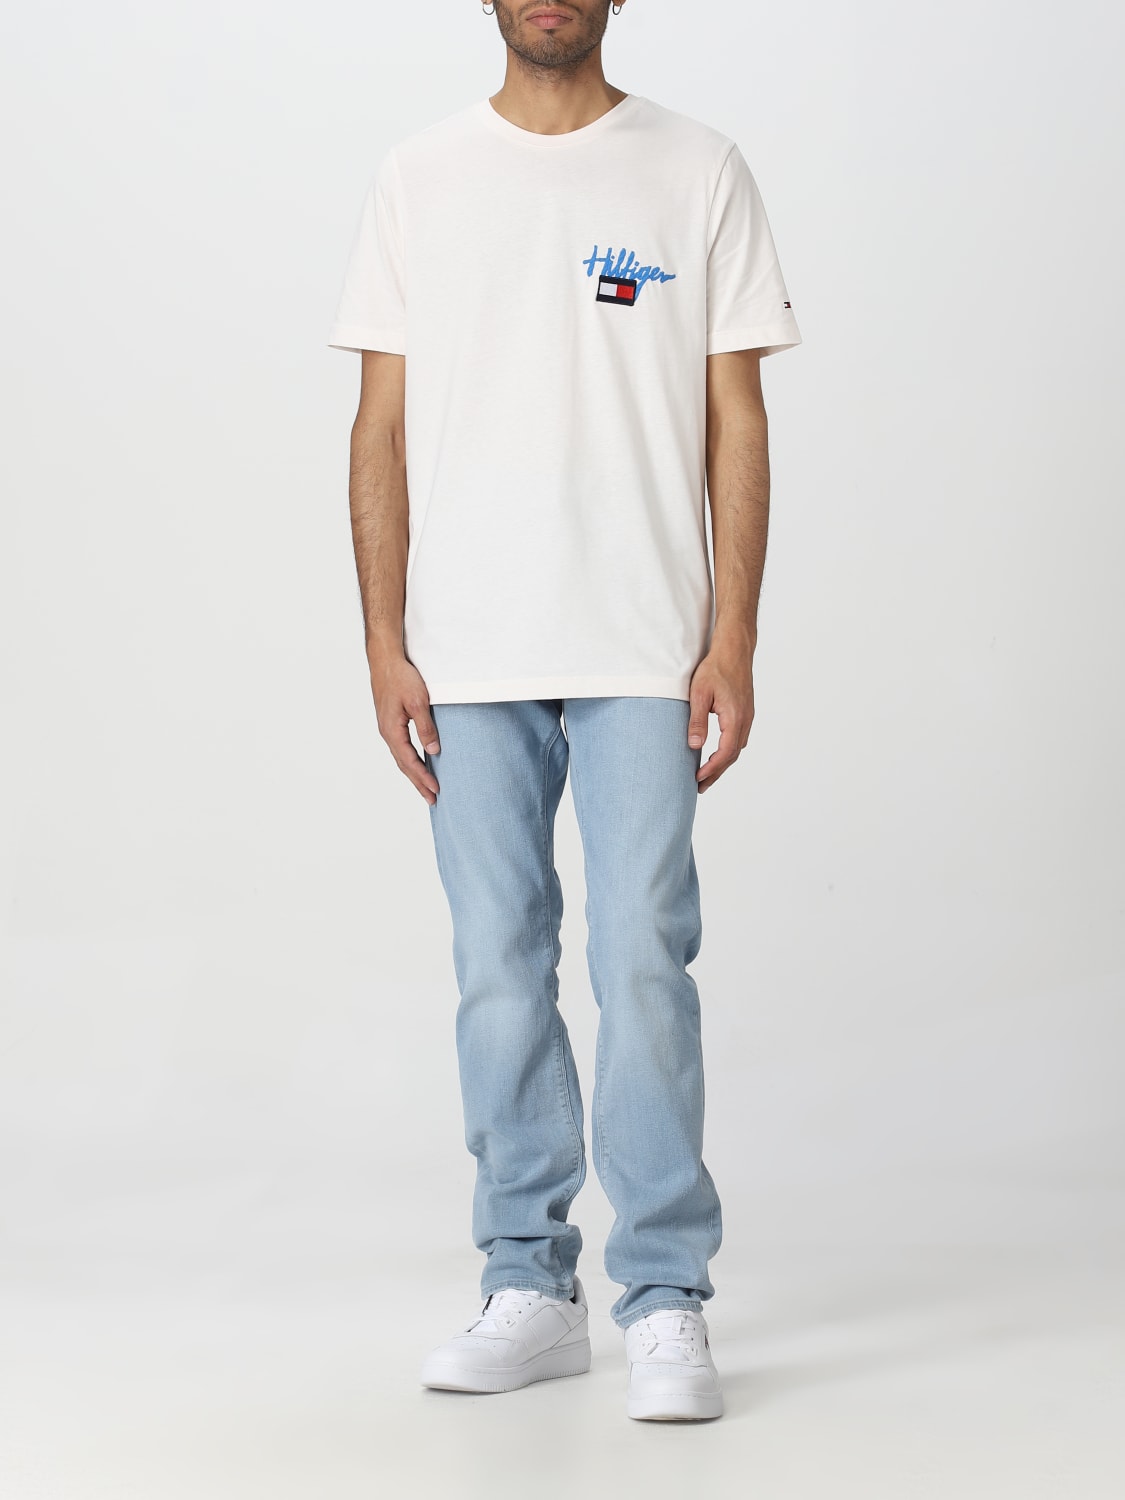 TOMMY HILFIGER: t-shirt for man - White | Hilfiger t-shirt MW0MW31266 online on GIGLIO.COM